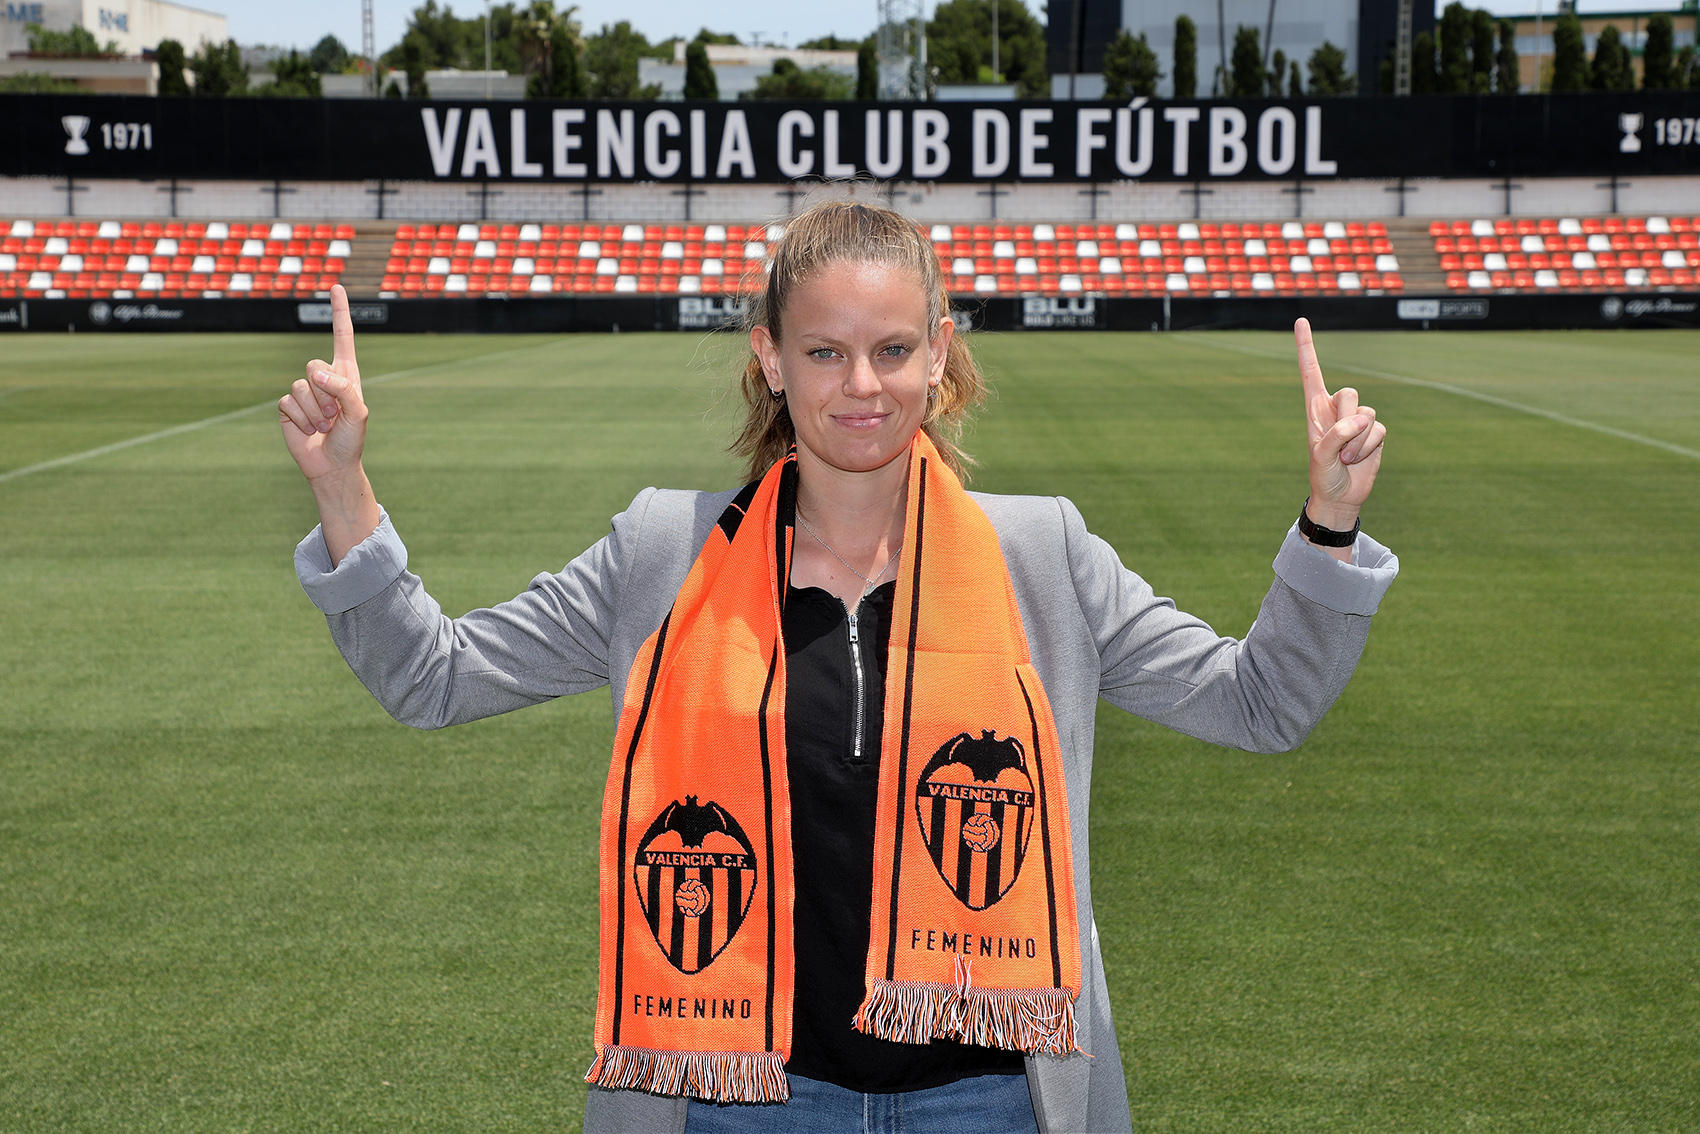 The lowdown on Valencia CF